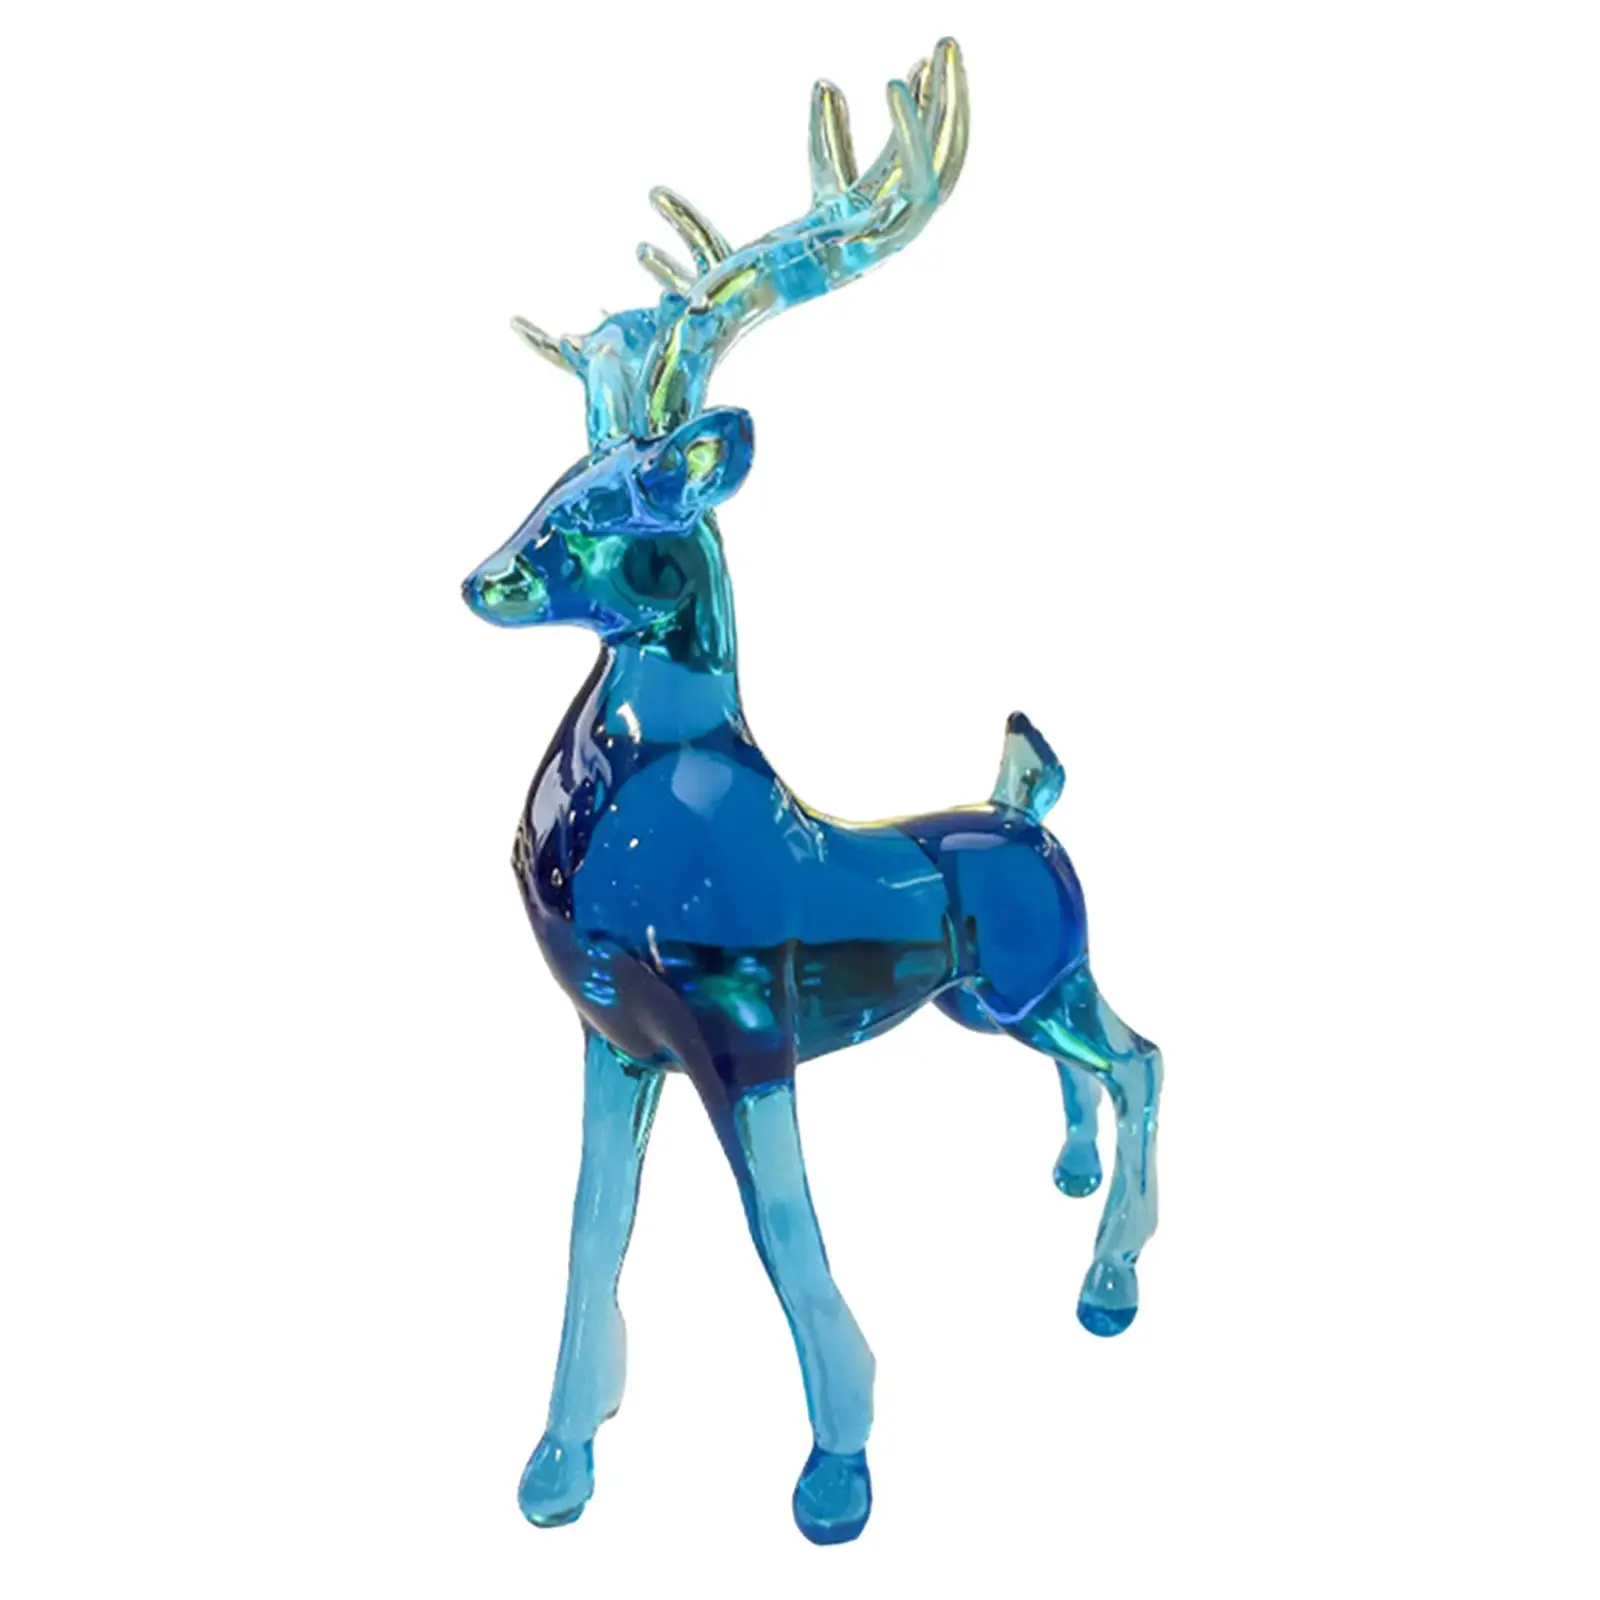 Deer Statue Decor Standing Deer Statues Nordic Style Crafts Reindeer Figurines Deer Figurines for Shelf Office Cafe Bedroom Home